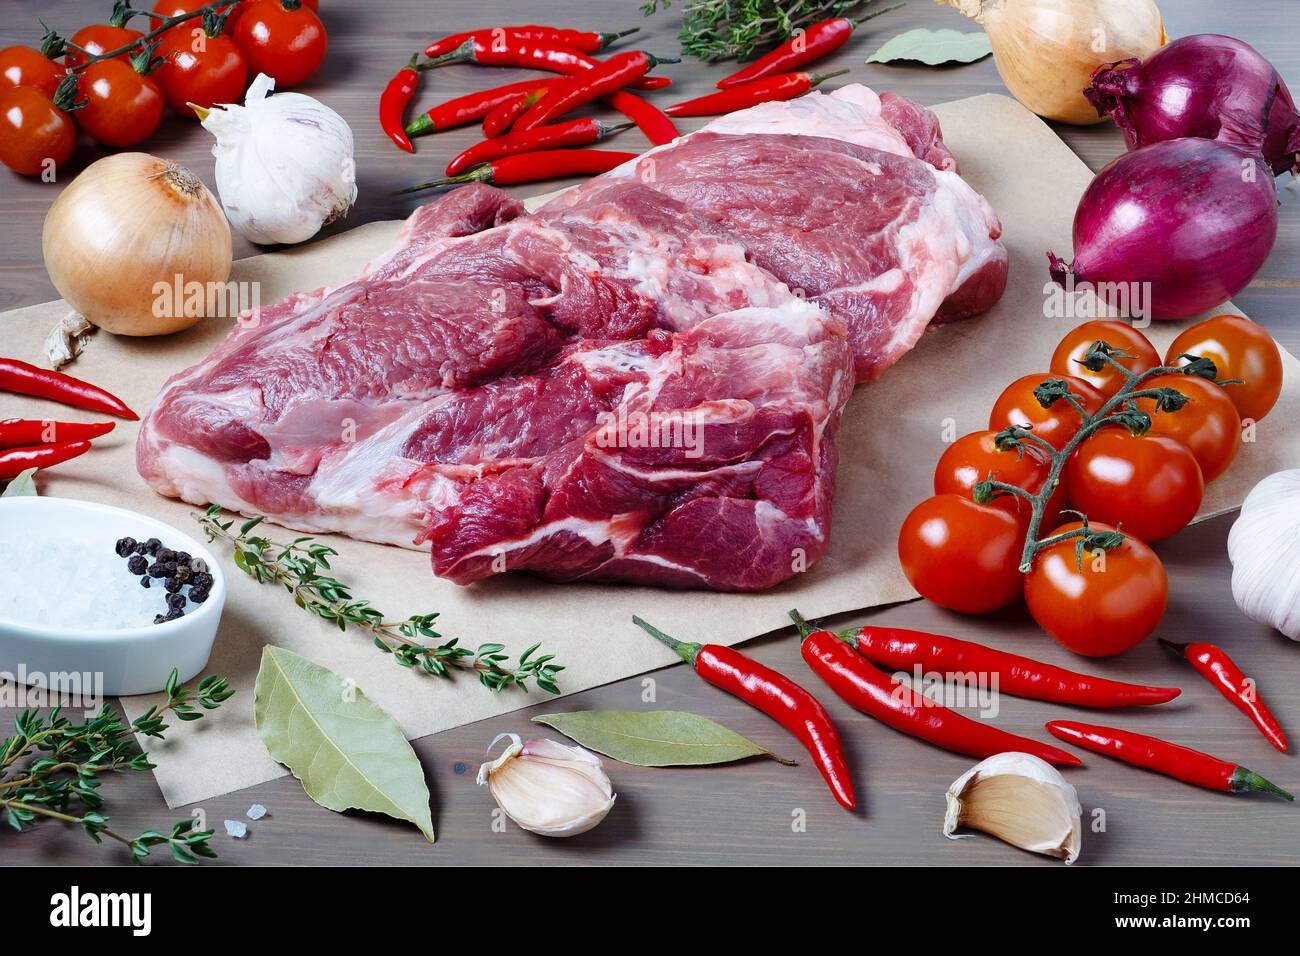 Piece of fresh pork meat on kitchen table Stock Photo